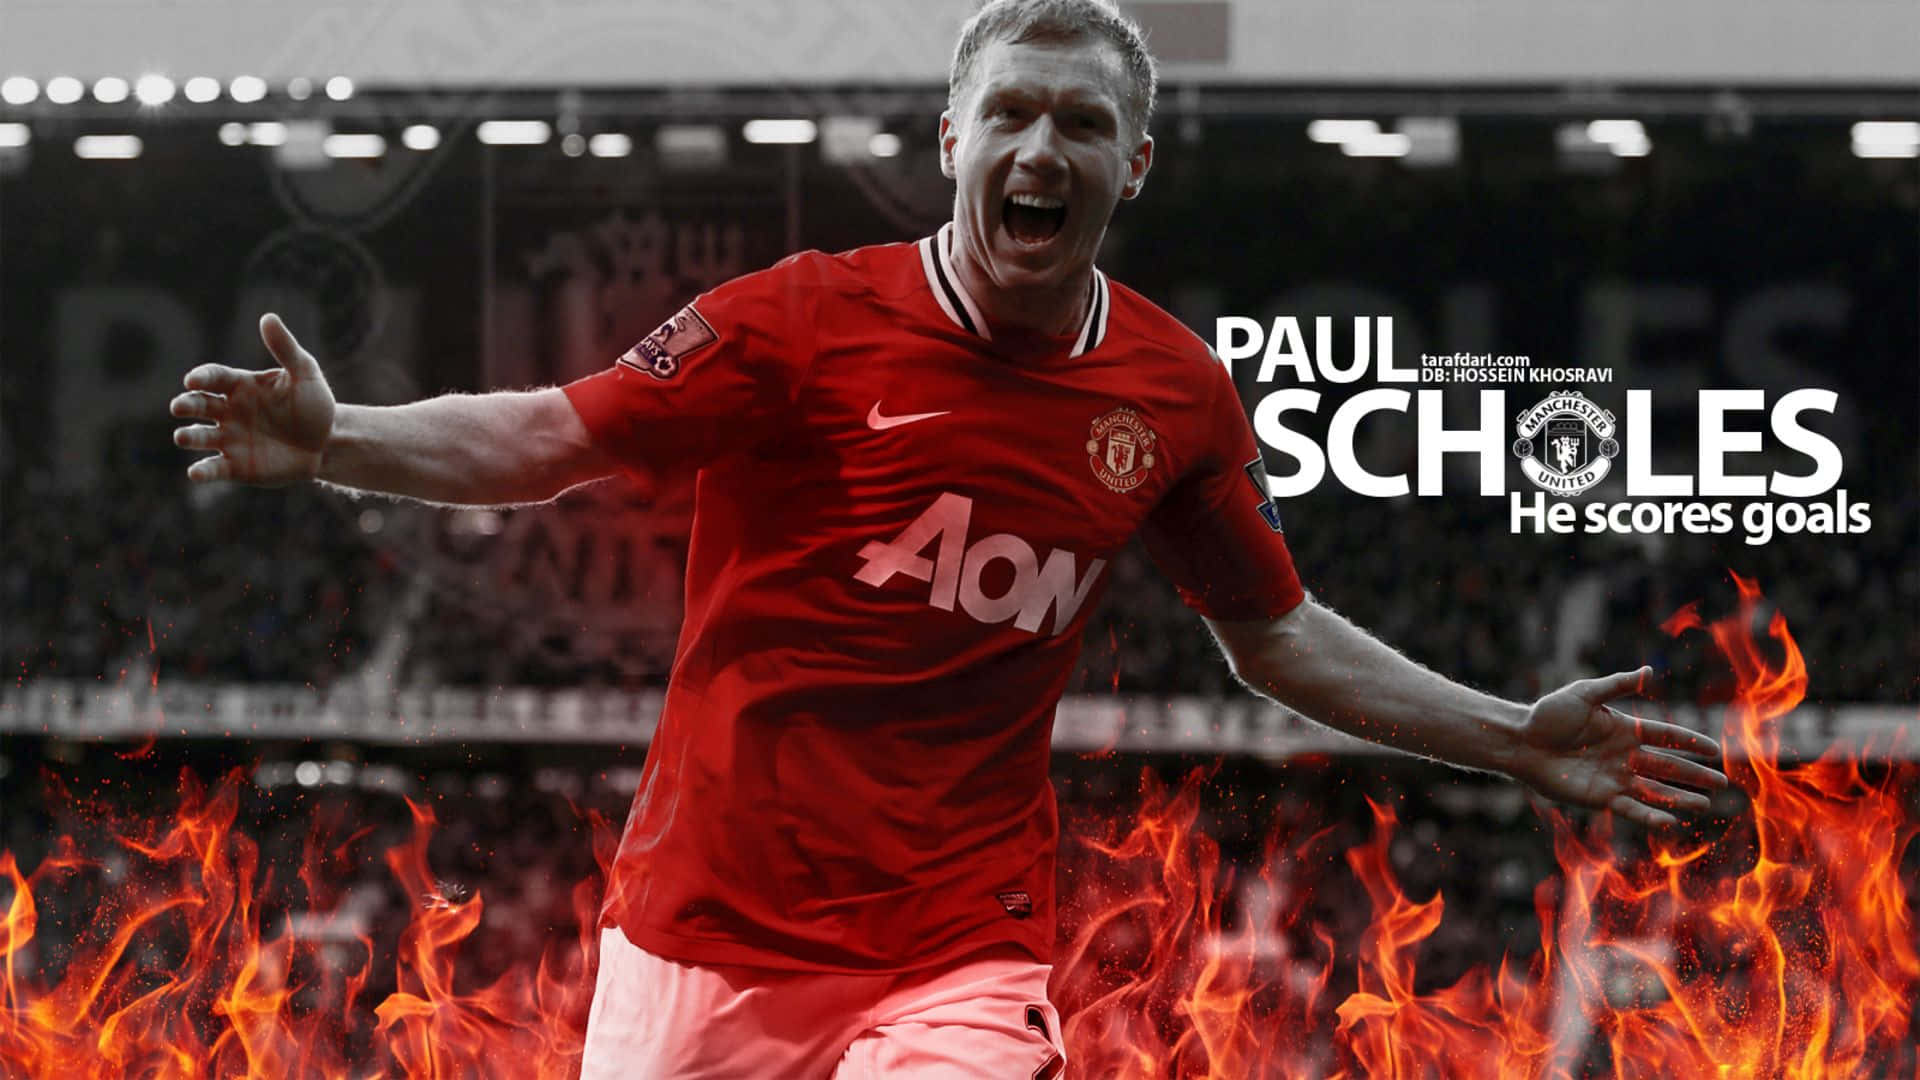 Manchester United Team Paul Scholes Wallpaper